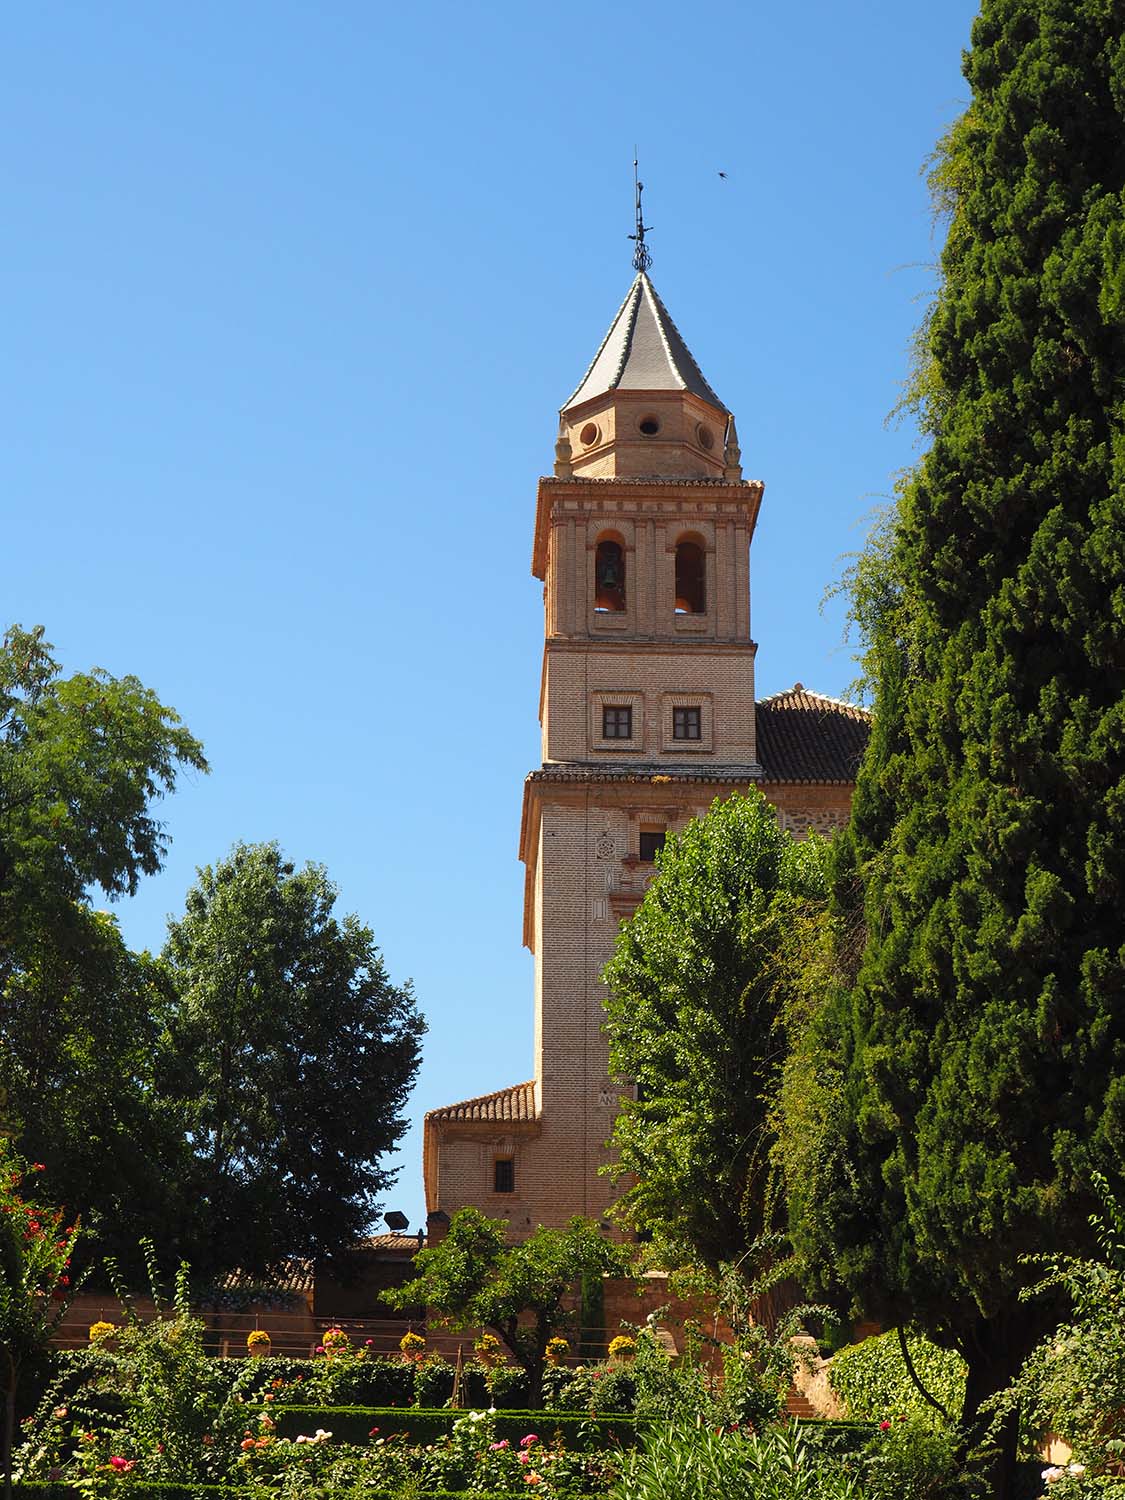 View of the bell tower of the Iglesia de Santa Maria de la Alhambra from the Jardines del Partal